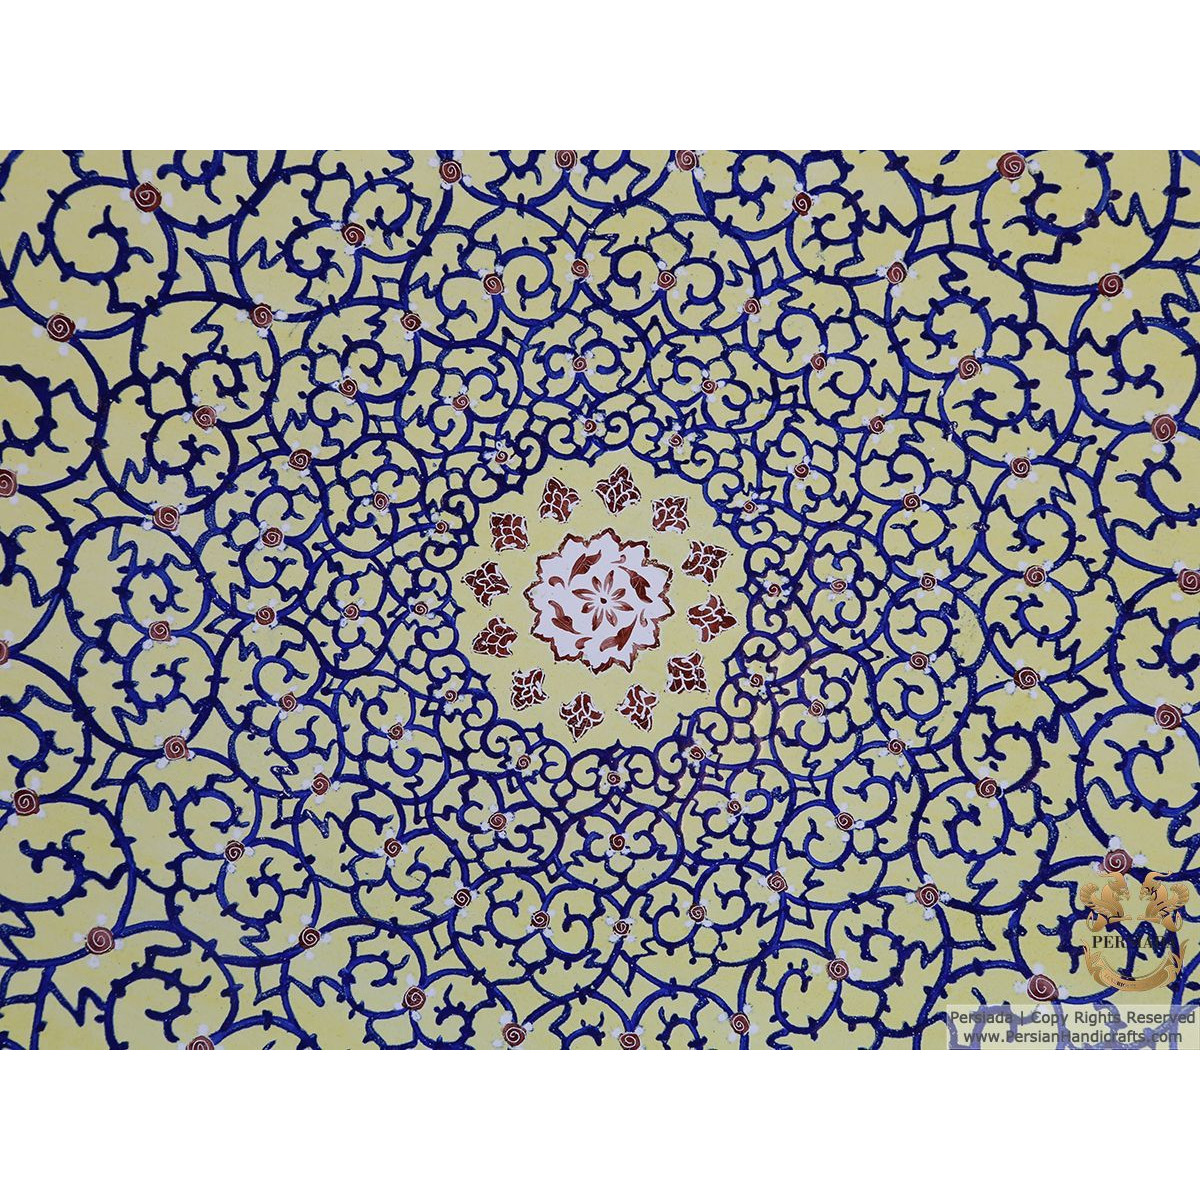 Wall Hanging Plate - Enamel Minakari | PE4101-Persian Handicrafts